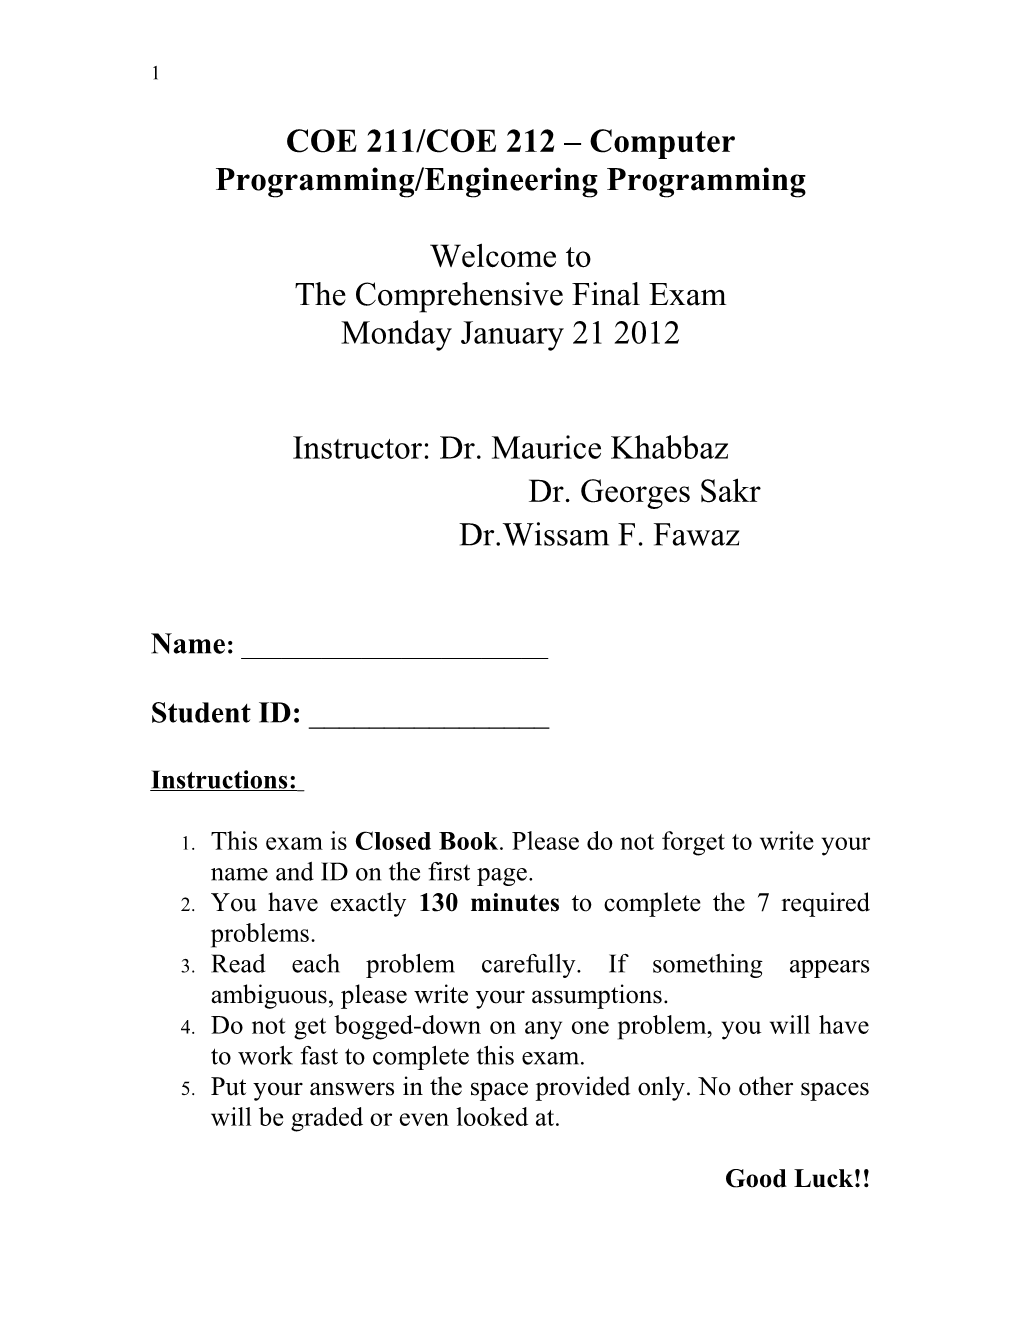 COE 211 Computer Programming